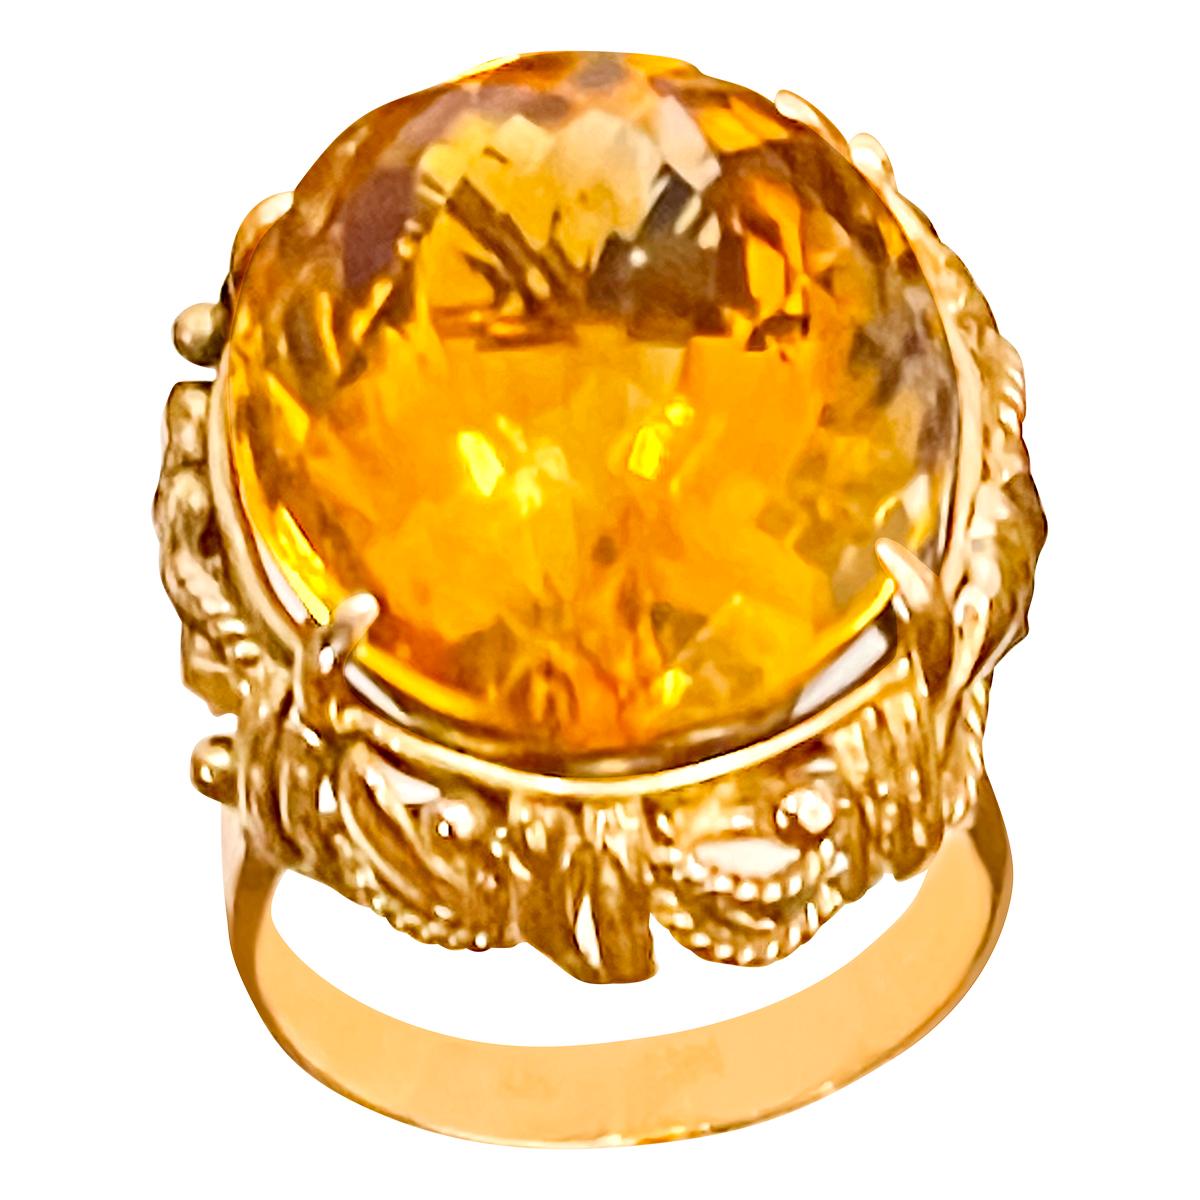 20 Carat Bezel-Set Diamond Solitaire Ring in 14kt Yellow Gold | Ross-Simons